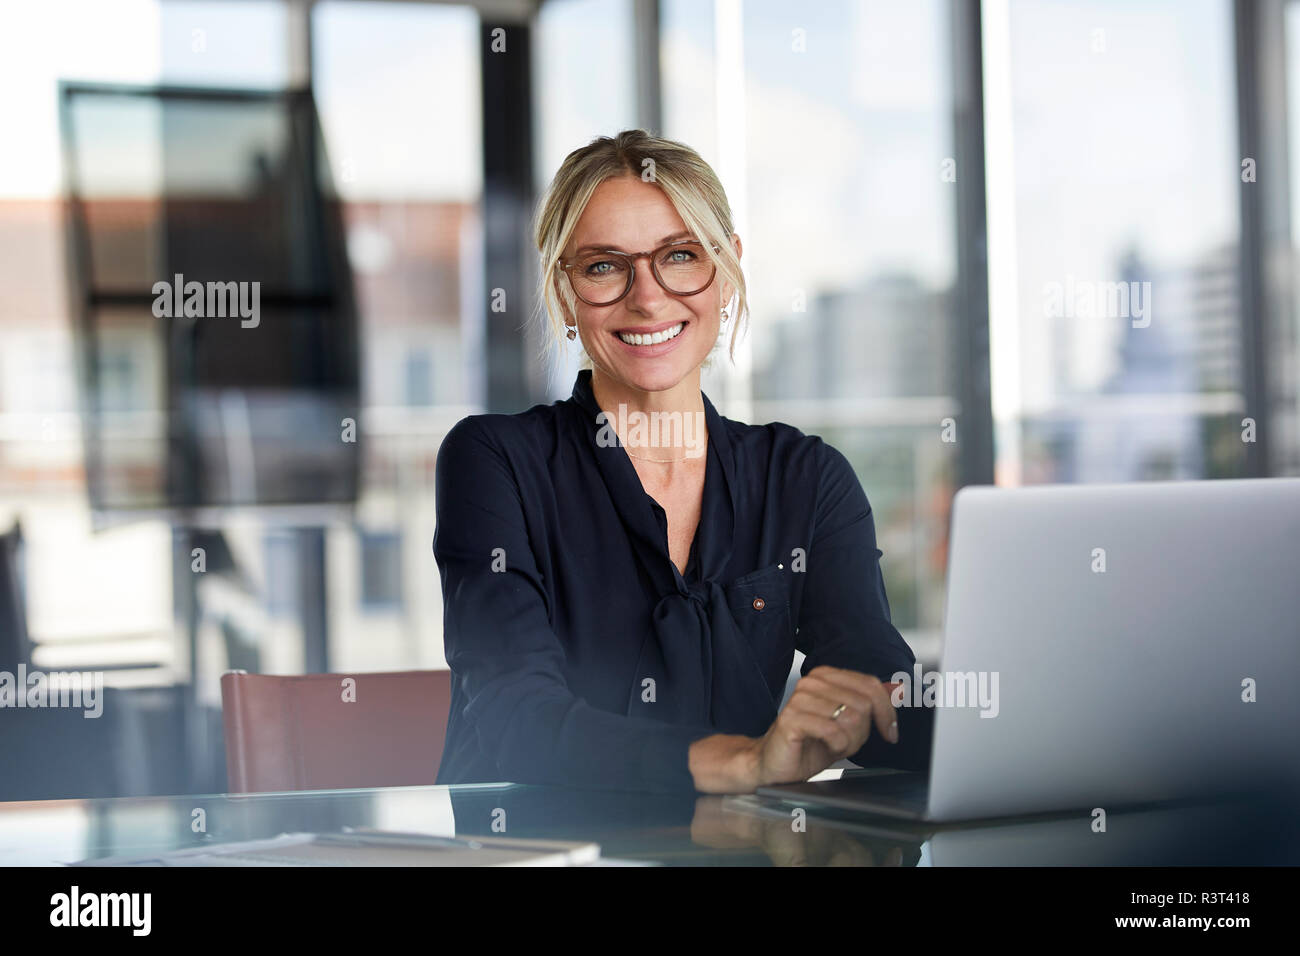 Businesswoman sitting at desk, using laptop, smiling friendly Banque D'Images